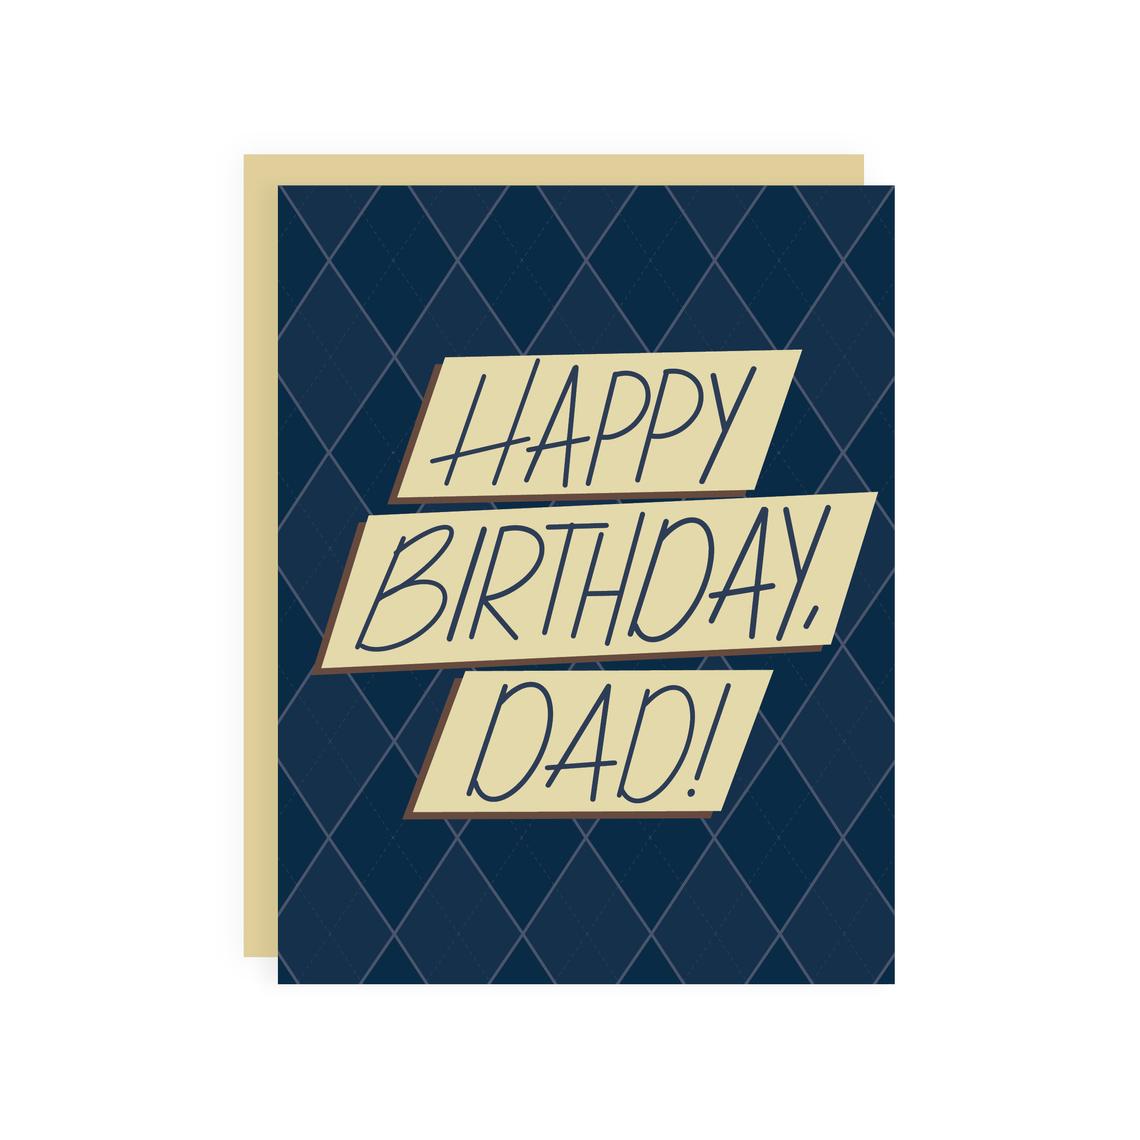 Happy Birthday, Dad! Card